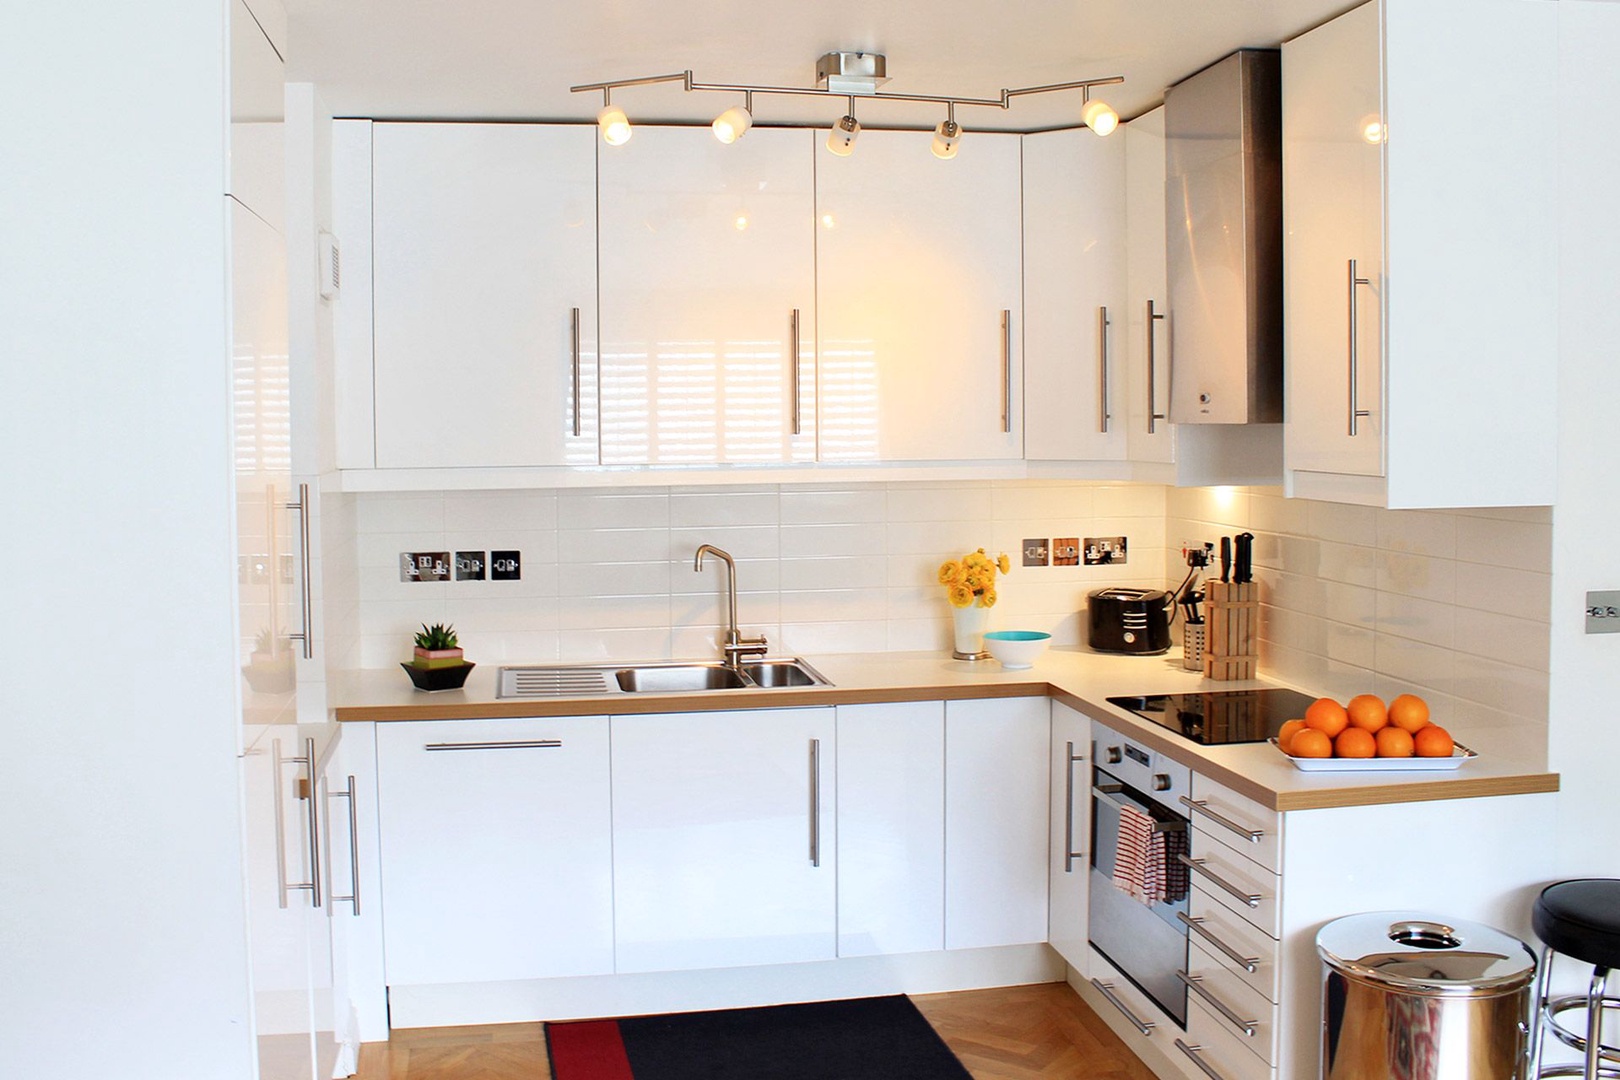 Stylish white kitchen with modern appliances